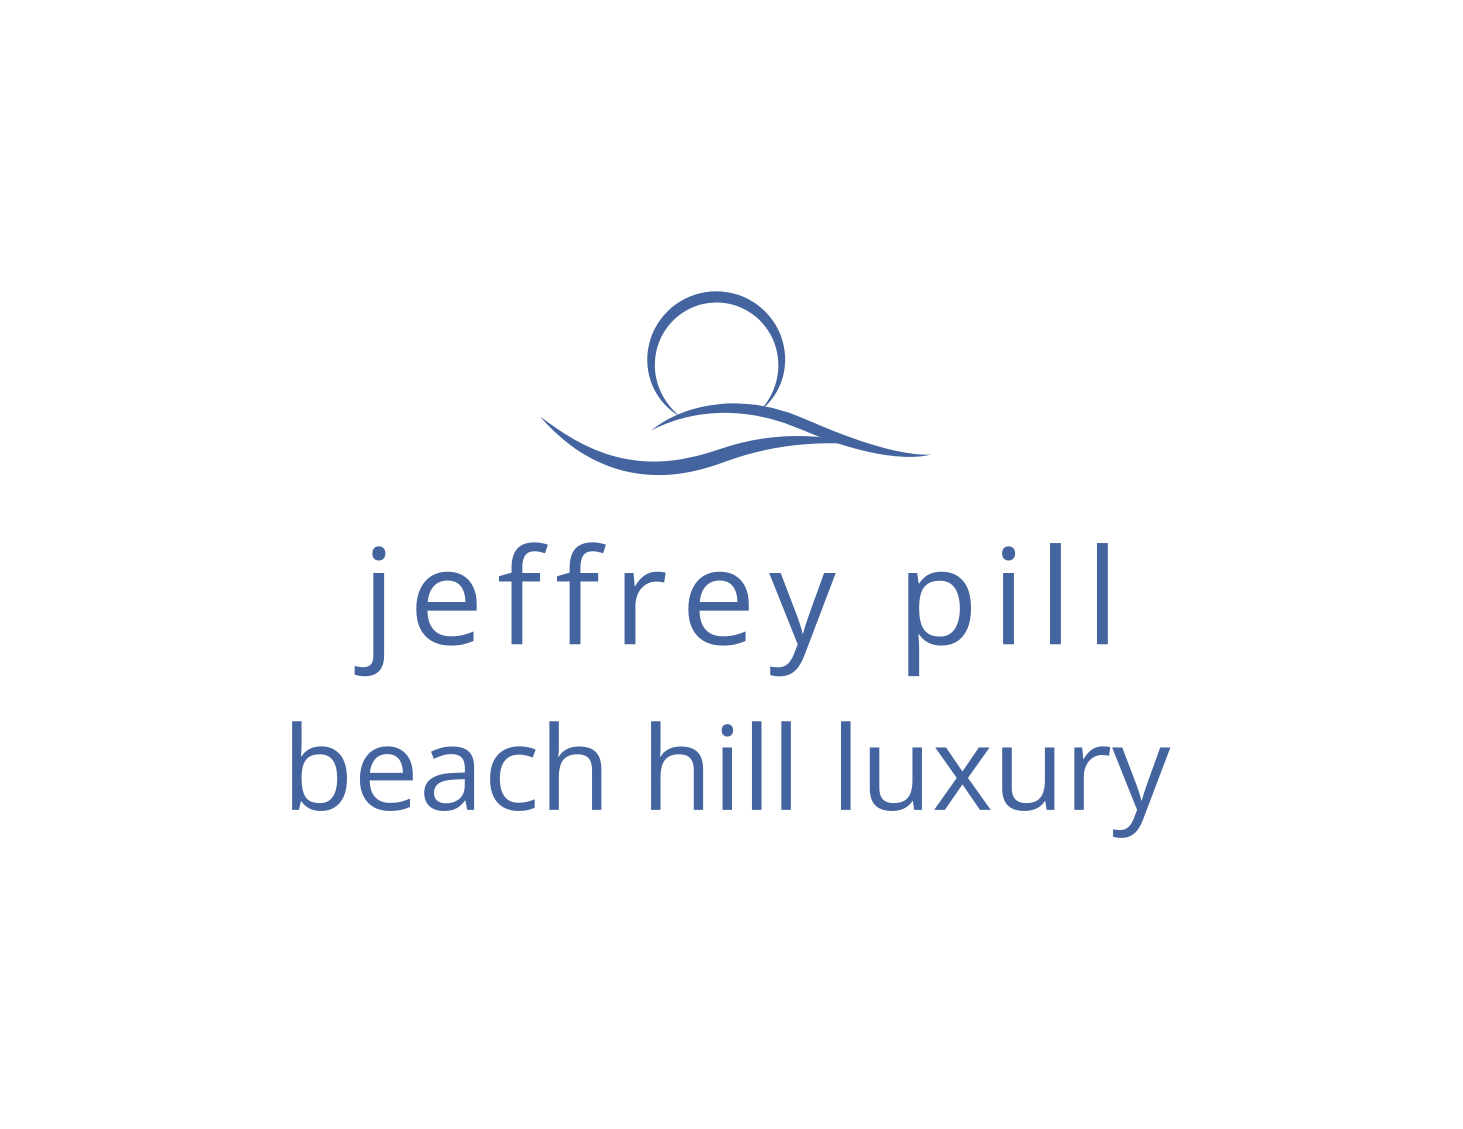 Jeffrey Pill Custom Image